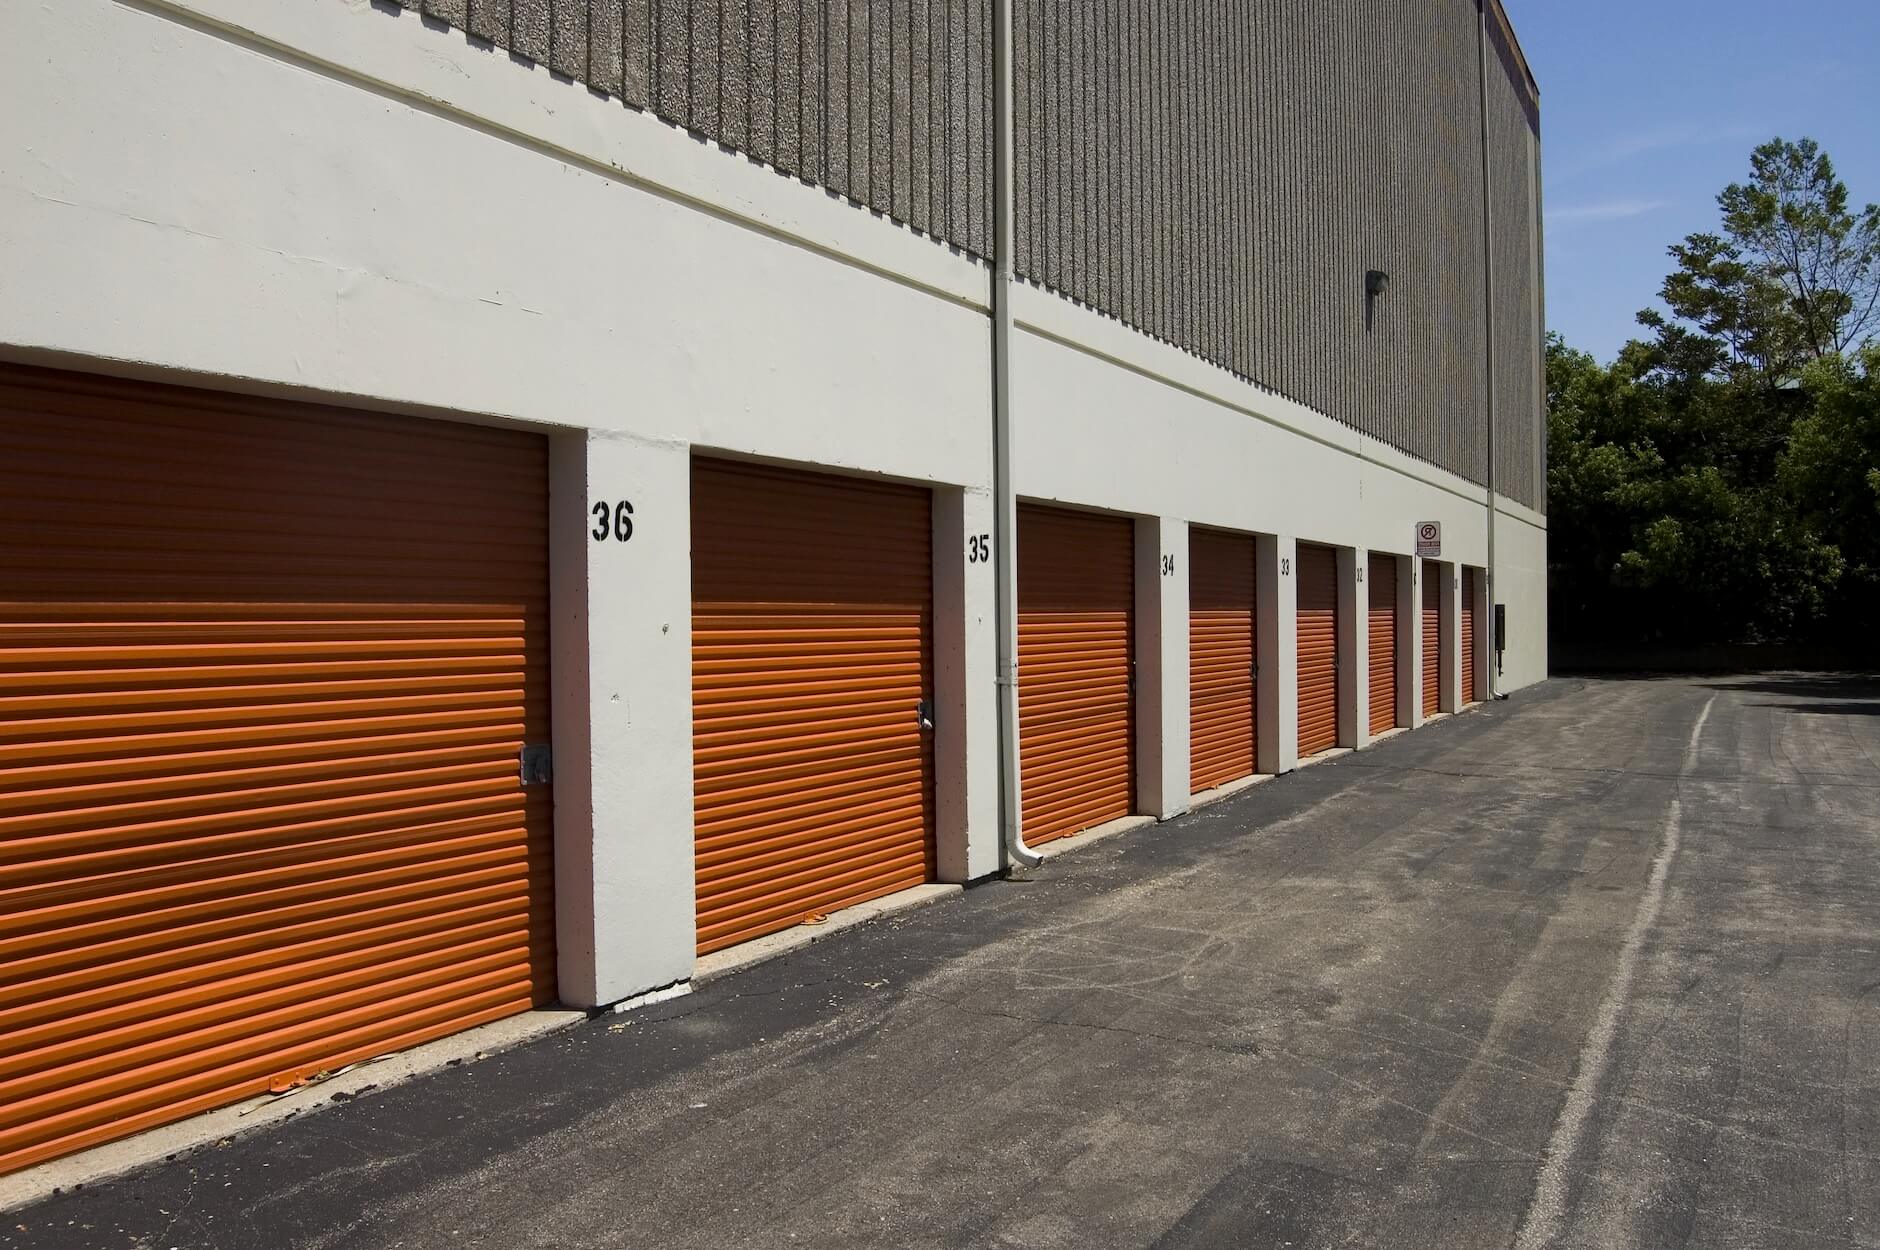 Storage units in a row with orange doors